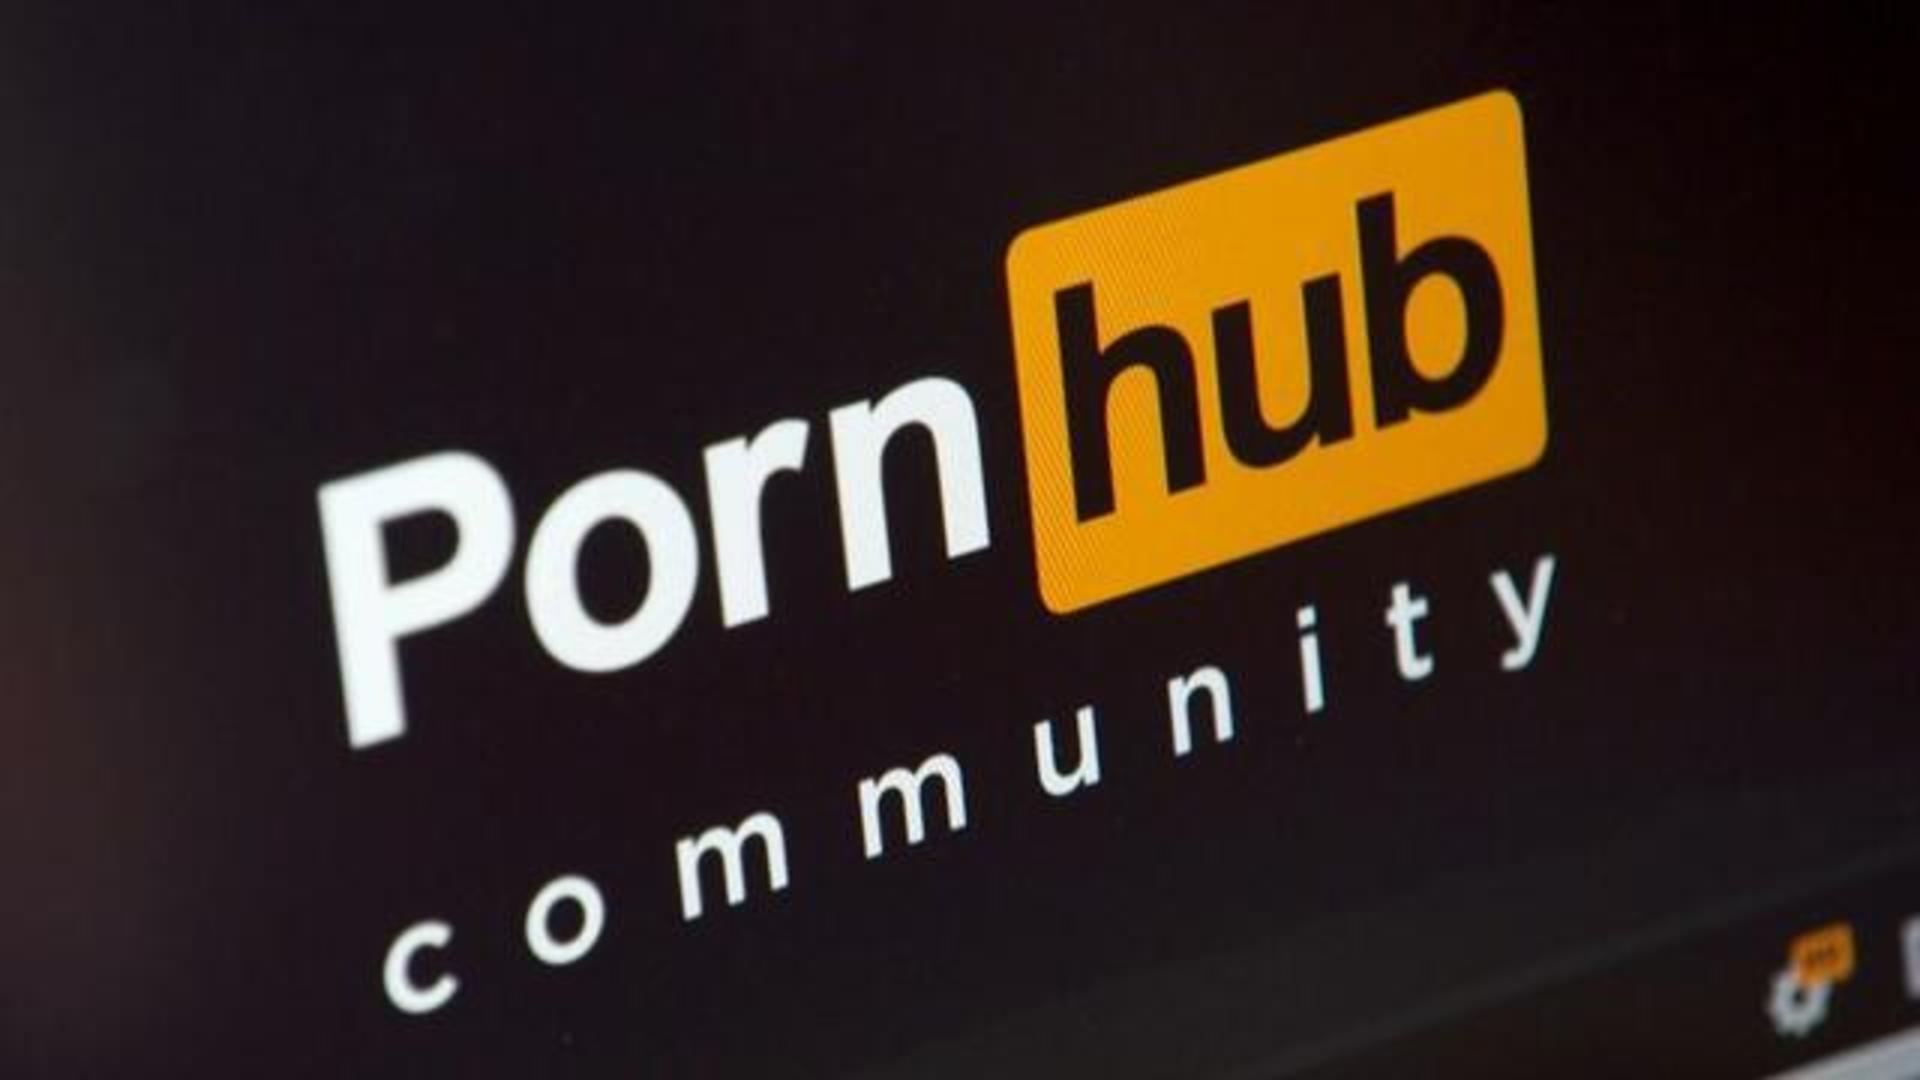 Porn Hub Community Com - Lawsuit accuses Pornhub of operating like a criminal enterprise - CBS News